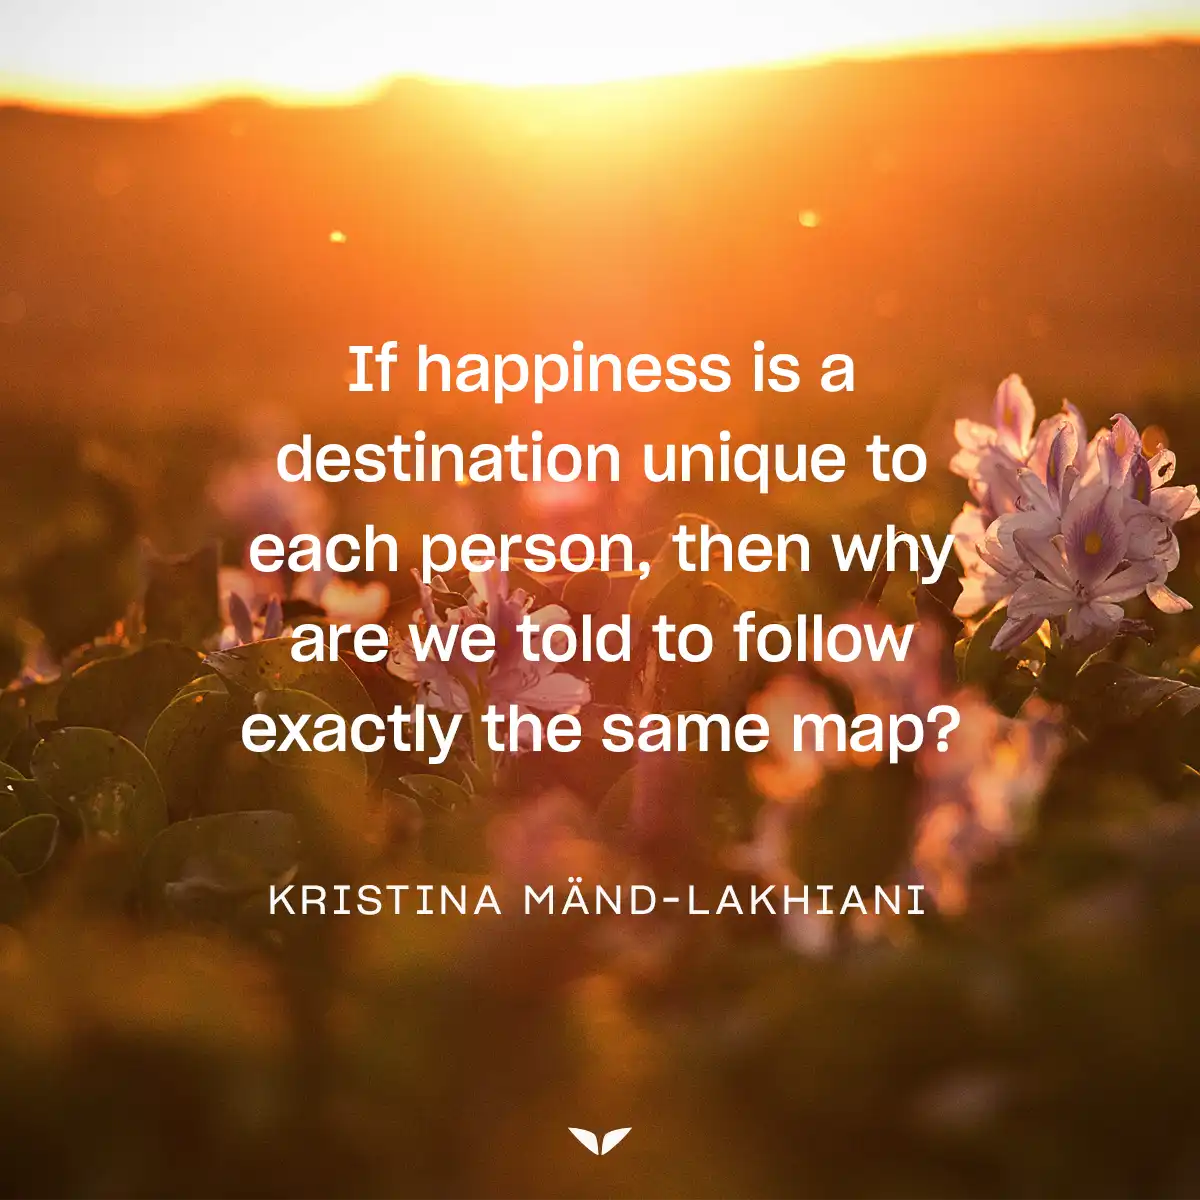 Kristina Mänd-Lakhiani quote on happiness